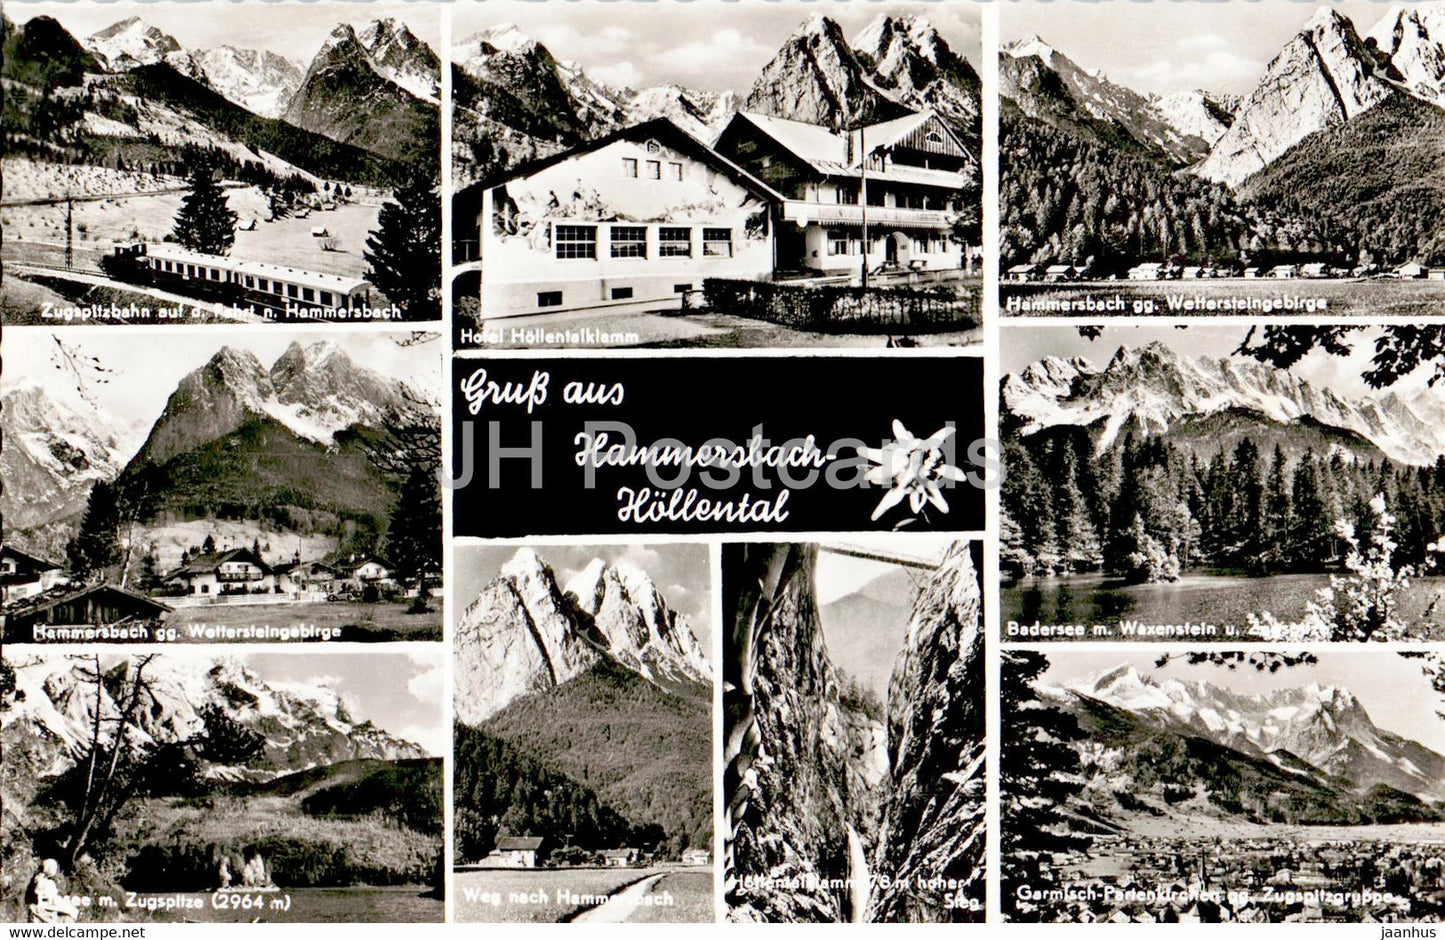 Gruss aus Hammersbach Hollental - train - hotel Hollentalklamm - old postcard - Germany - unused - JH Postcards